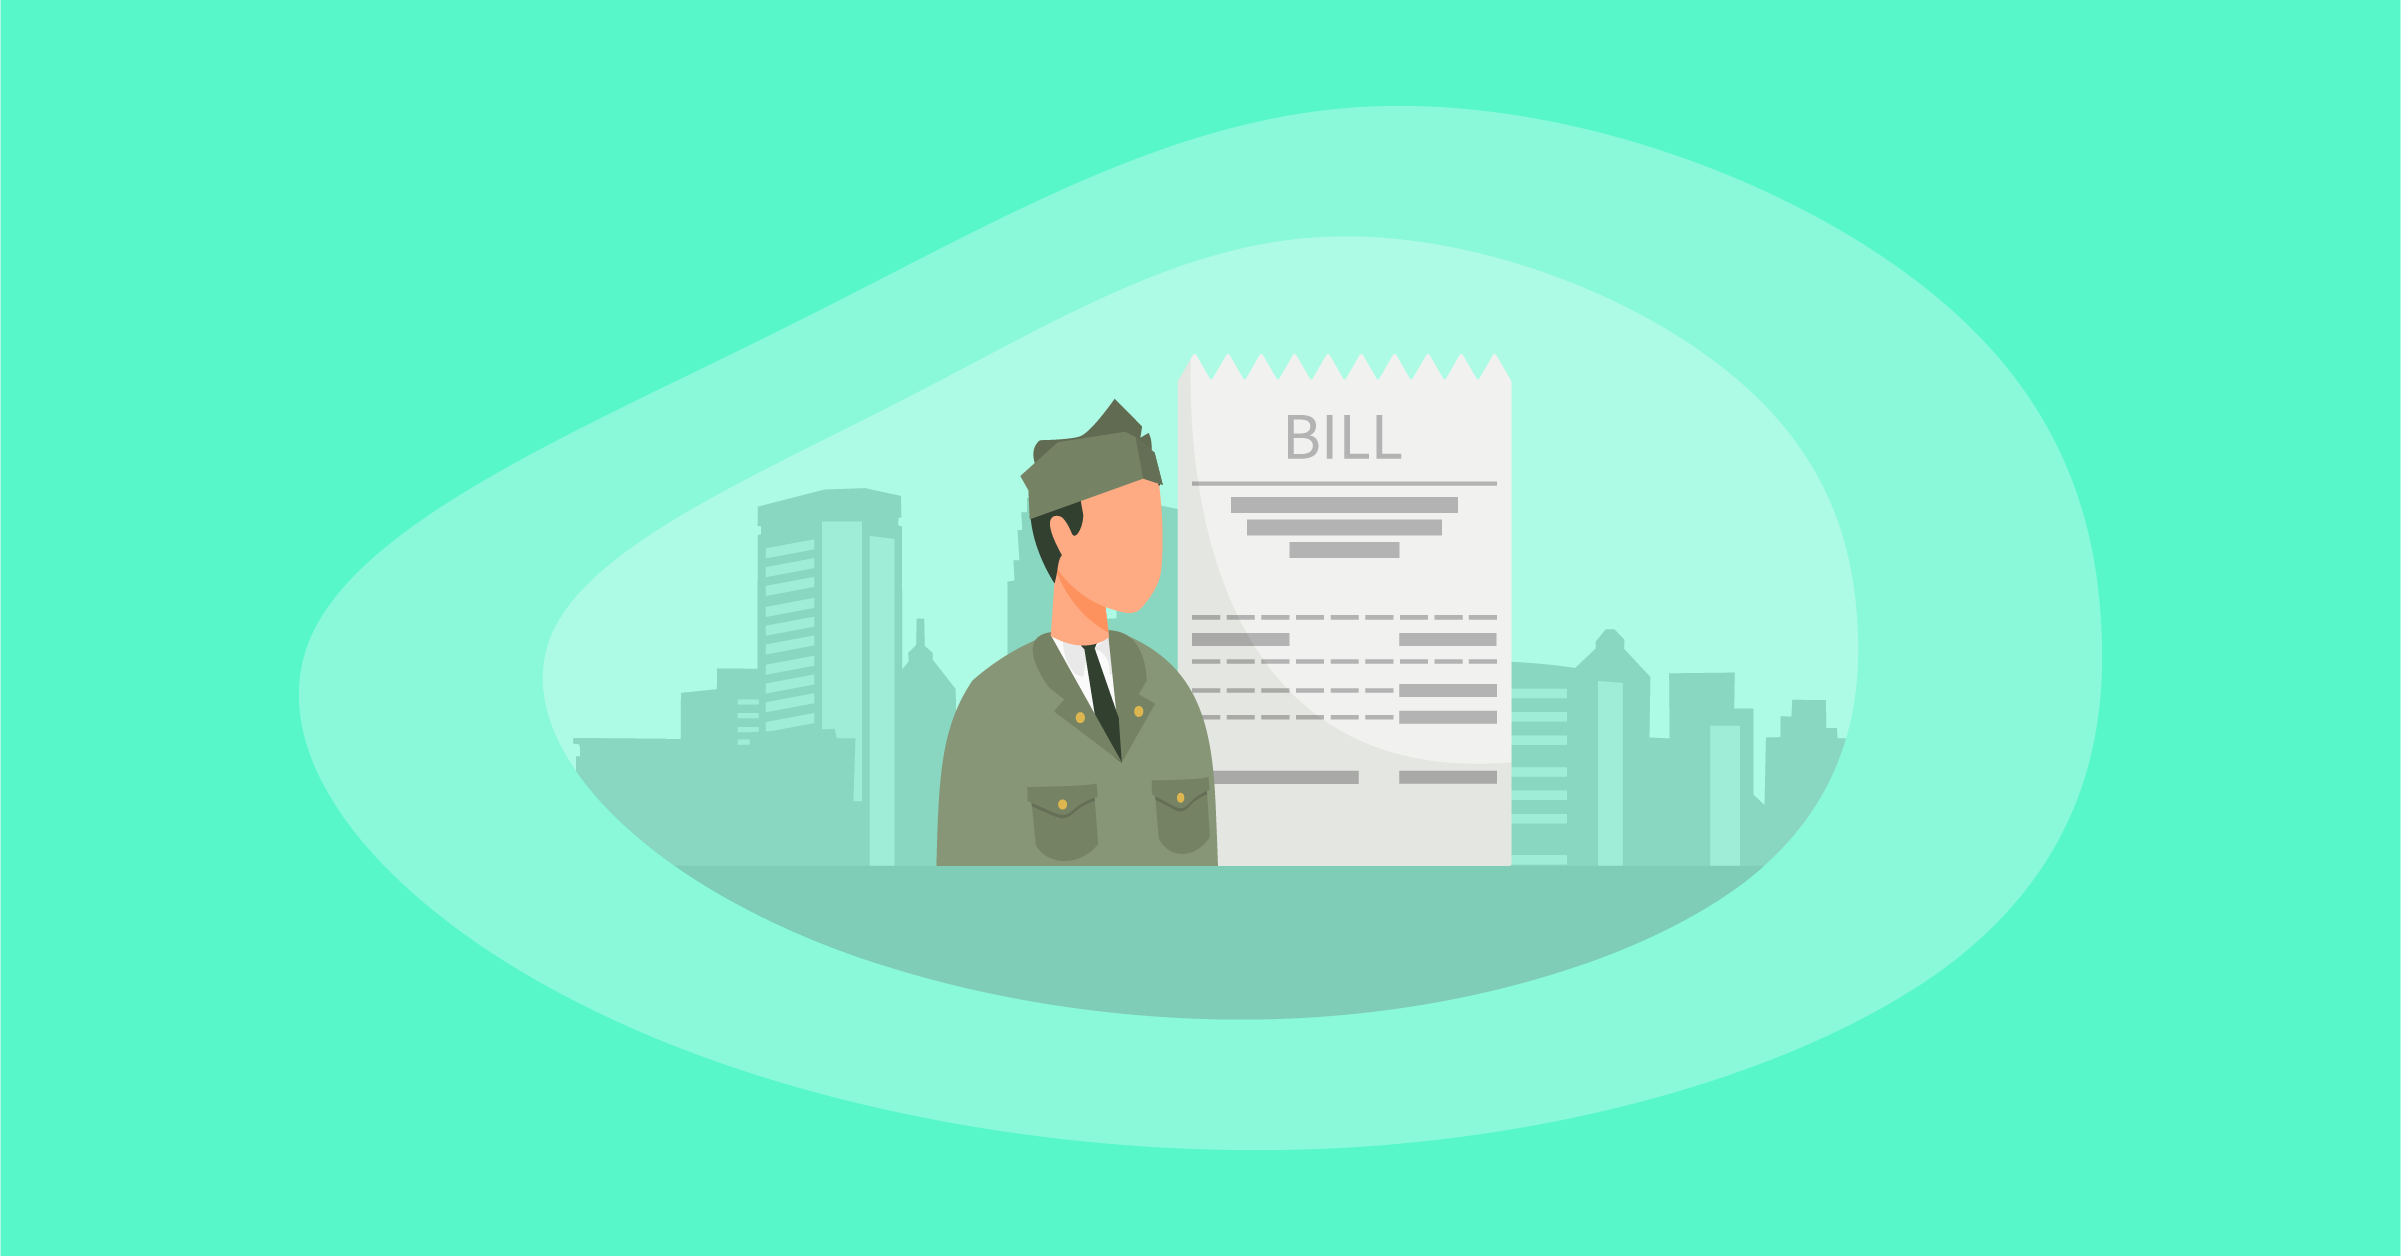 Illustration of a veteran and a bill